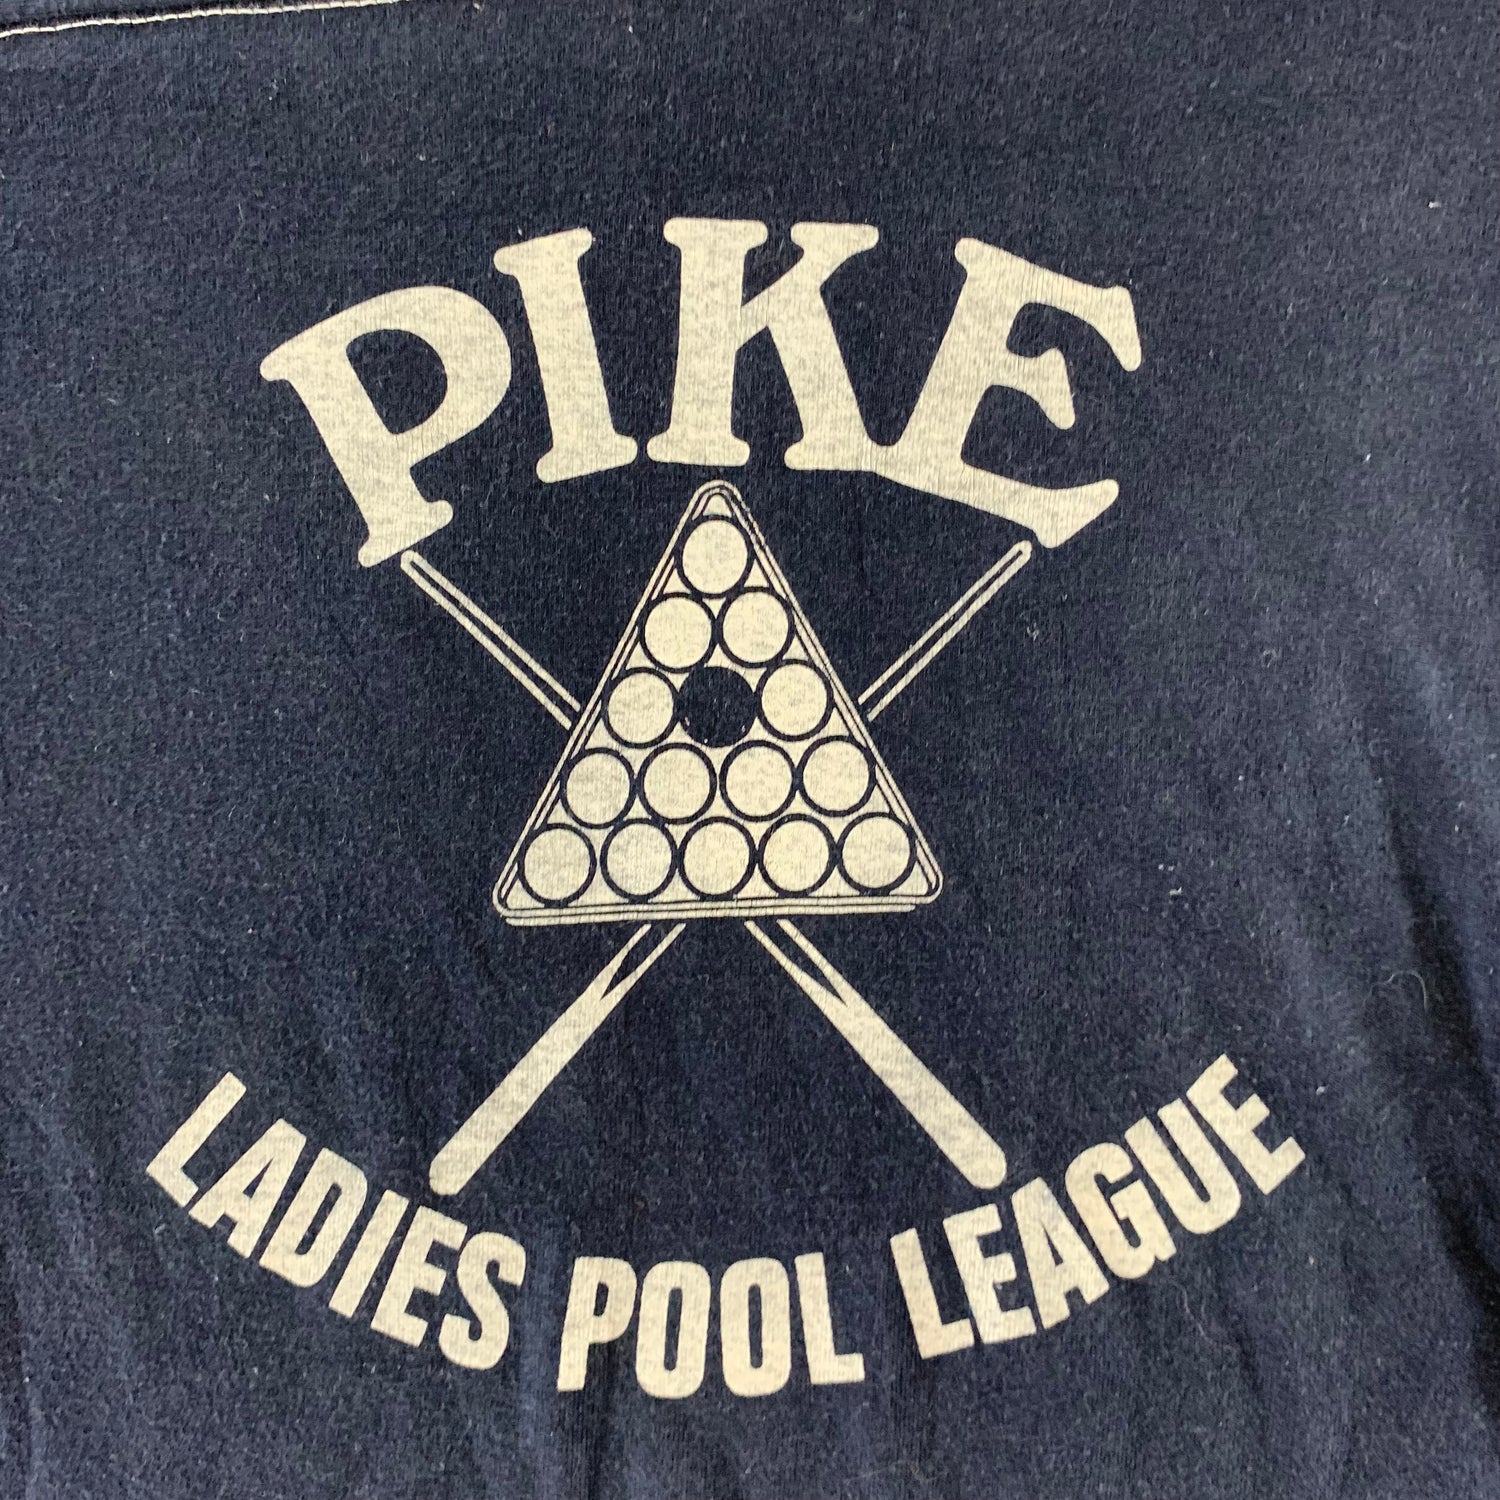 Vintage 1980s Ladies Pool League T-shirt size Medium